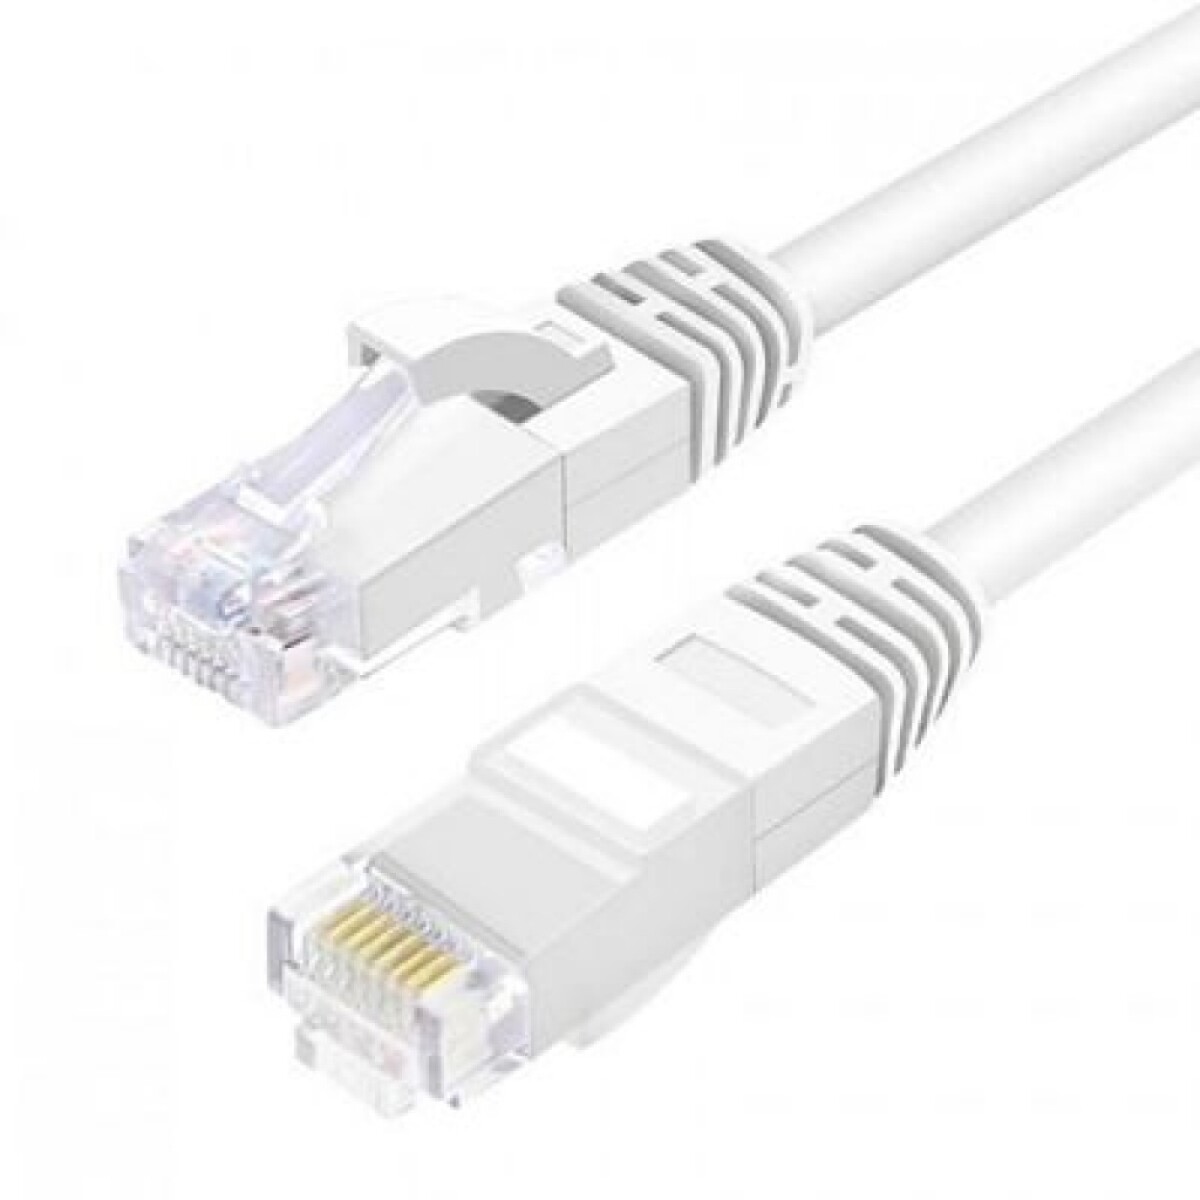 Cable de red LAN Categoria 5e - 10 metros de largo 